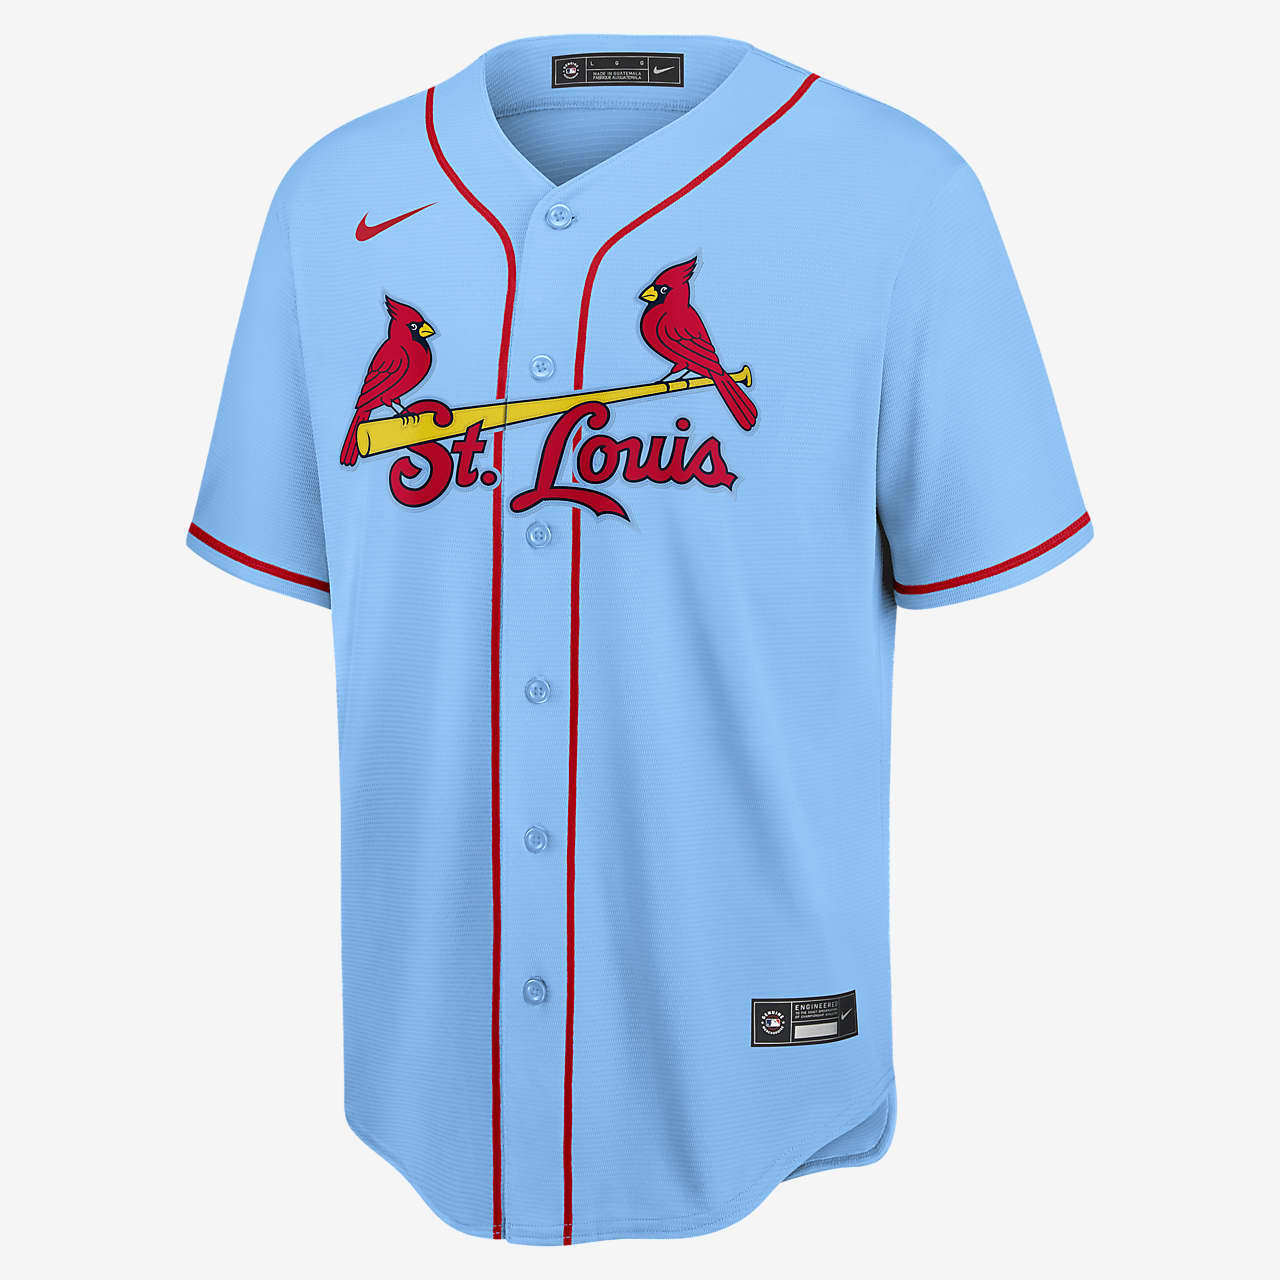 Jersey de béisbol Replica para hombre MLB St. Louis Cardinals (Paul Goldschmidt)